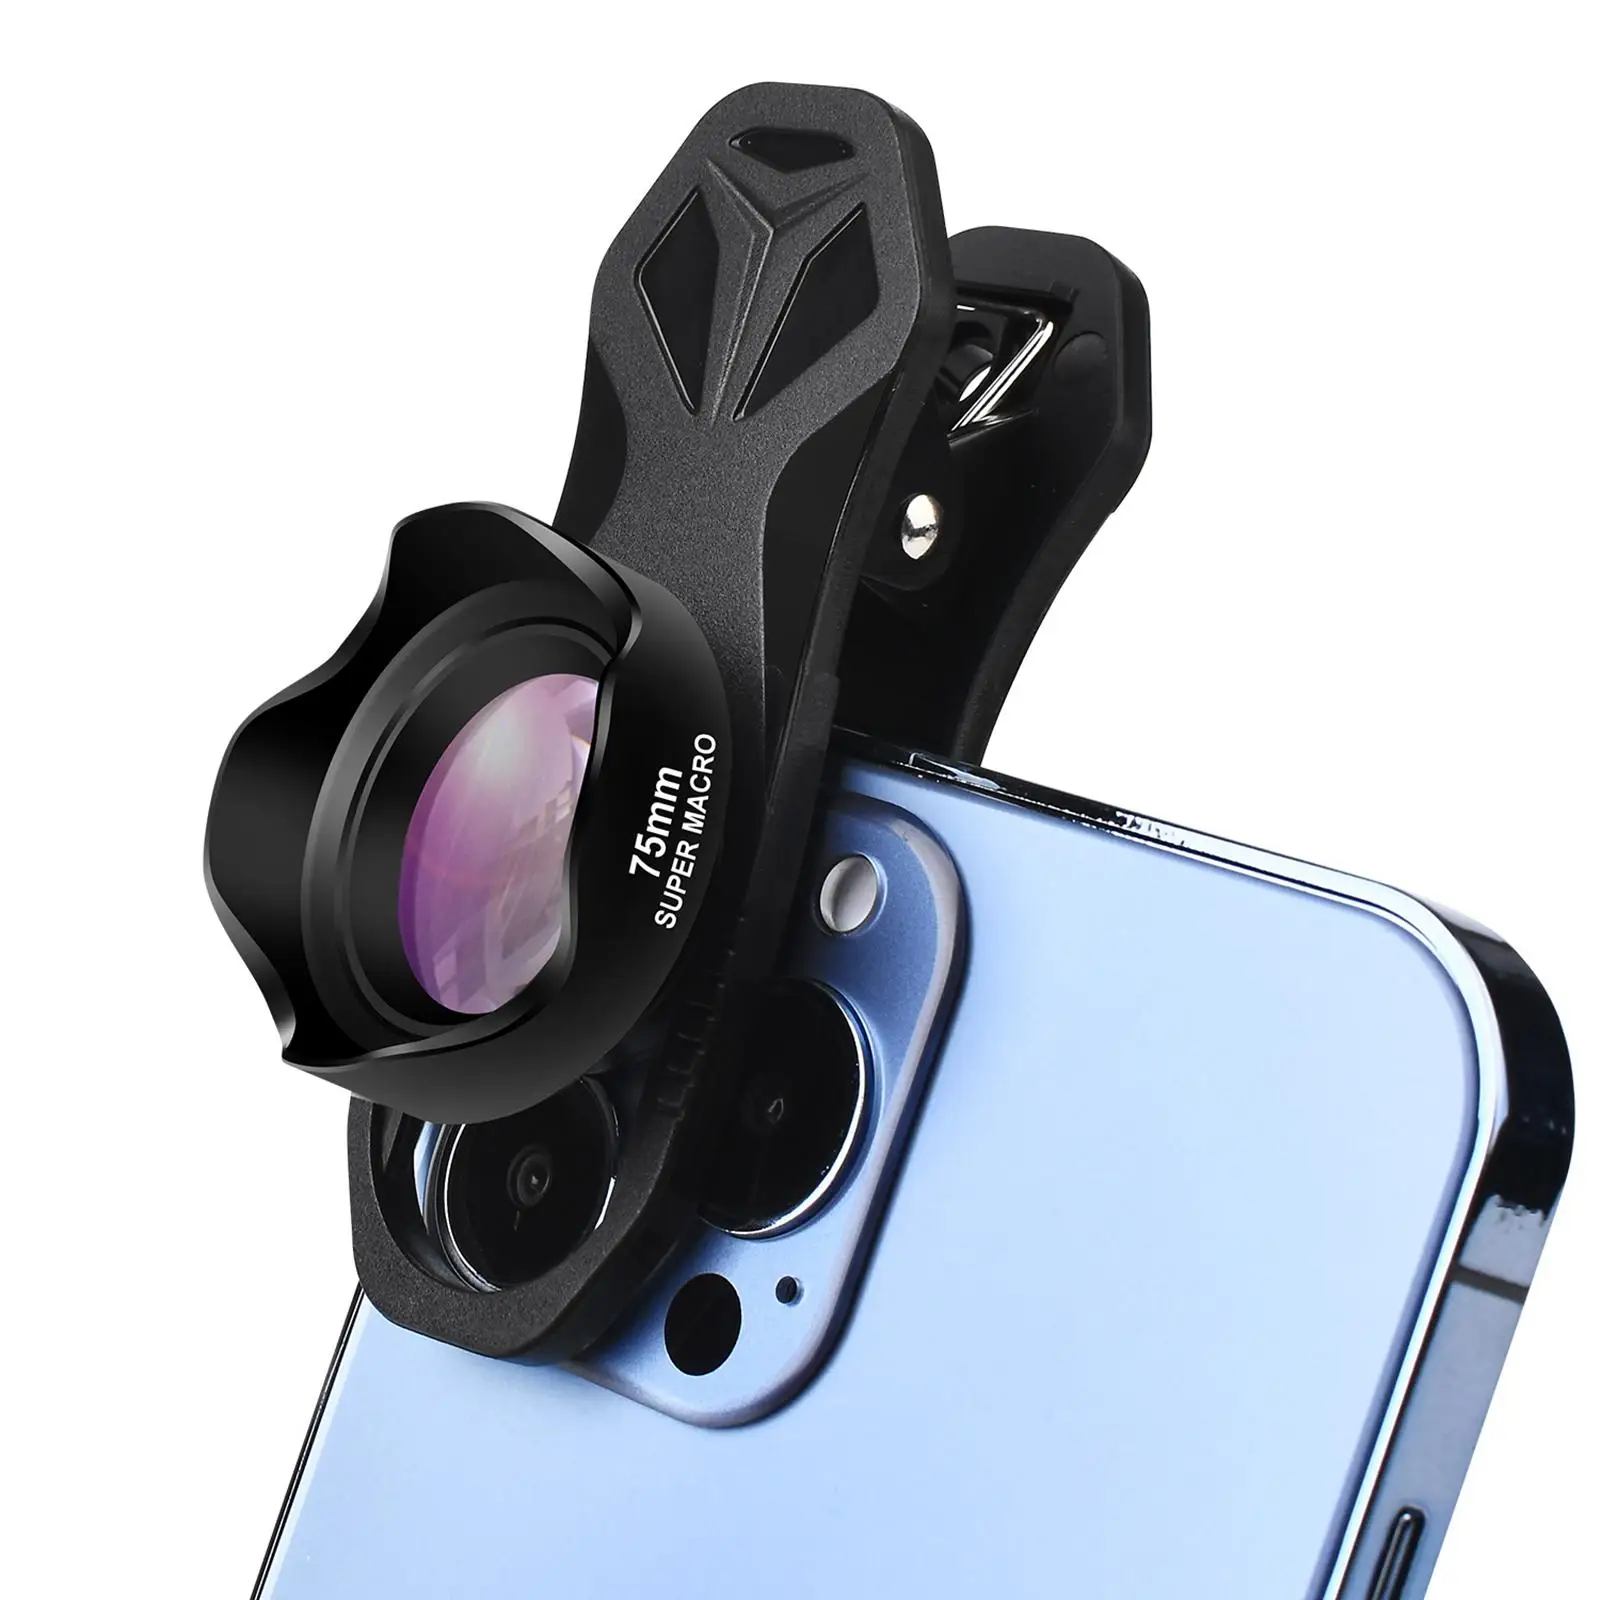 10x Phone Camera Macro Lens 75mm 4K HD Wide Angle Macro Lenses for Most Smartphones Phone Lense Camera Kit No Distortion